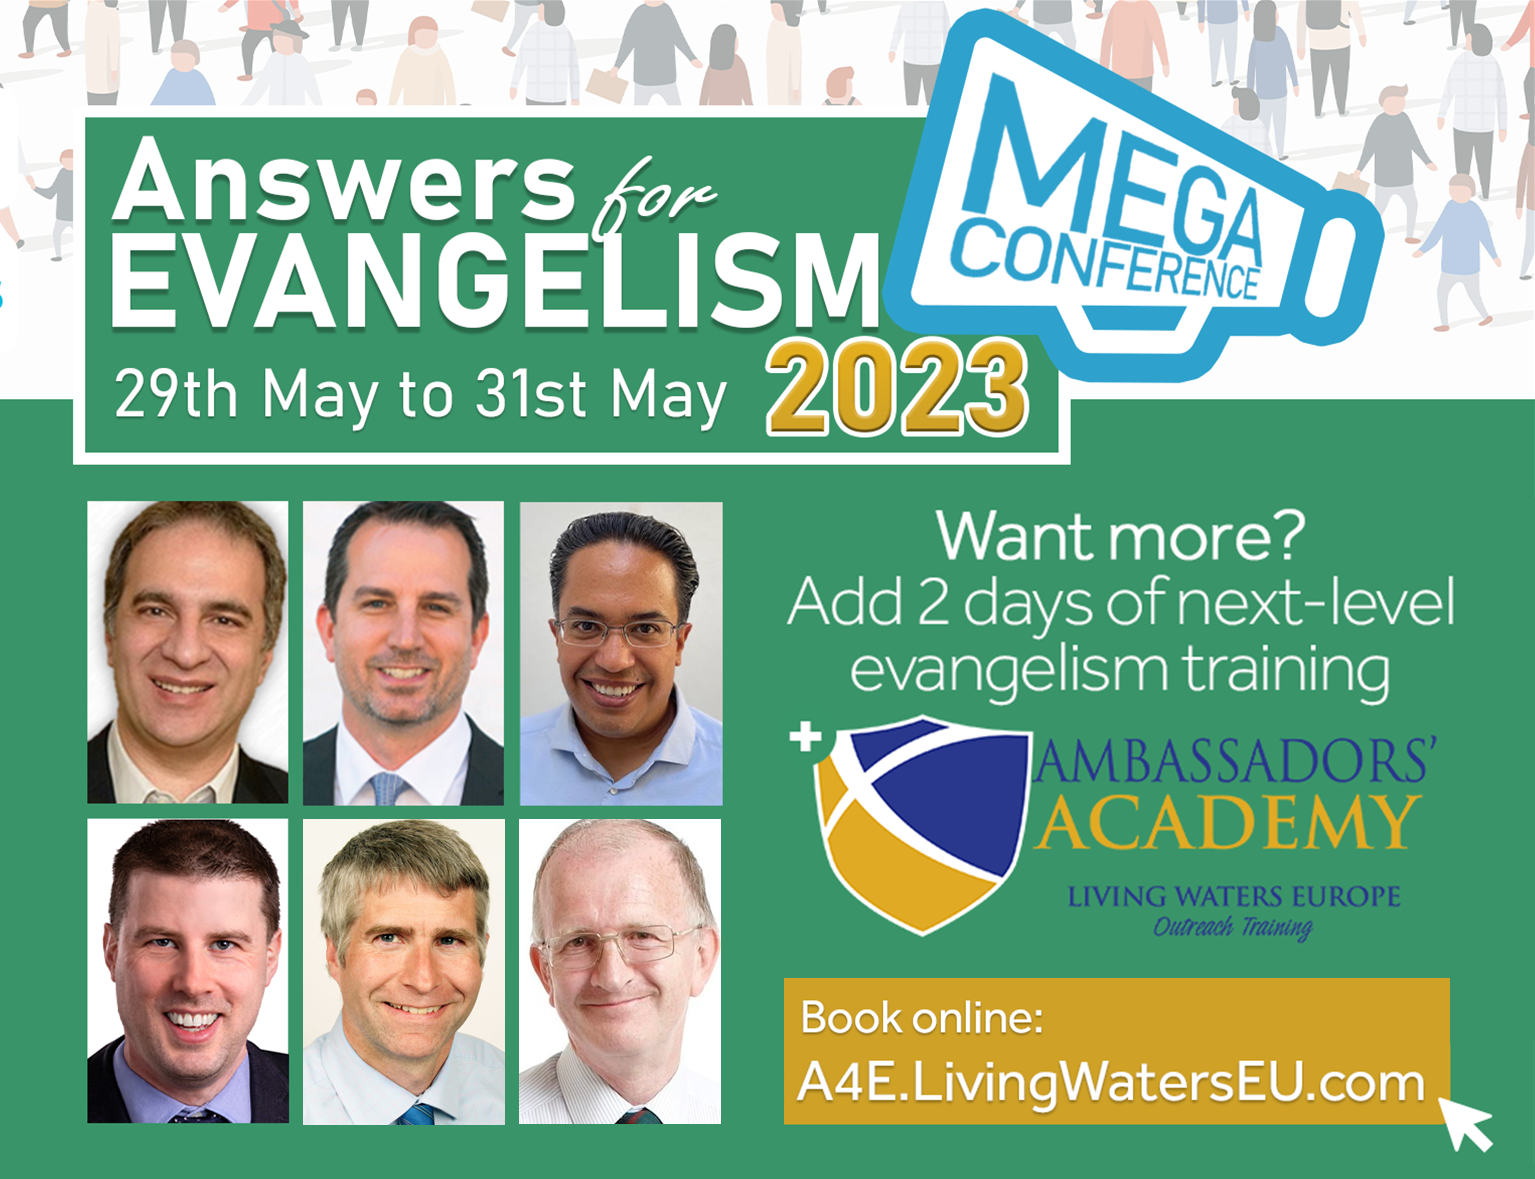 Answers for Evangelism Mega Conference